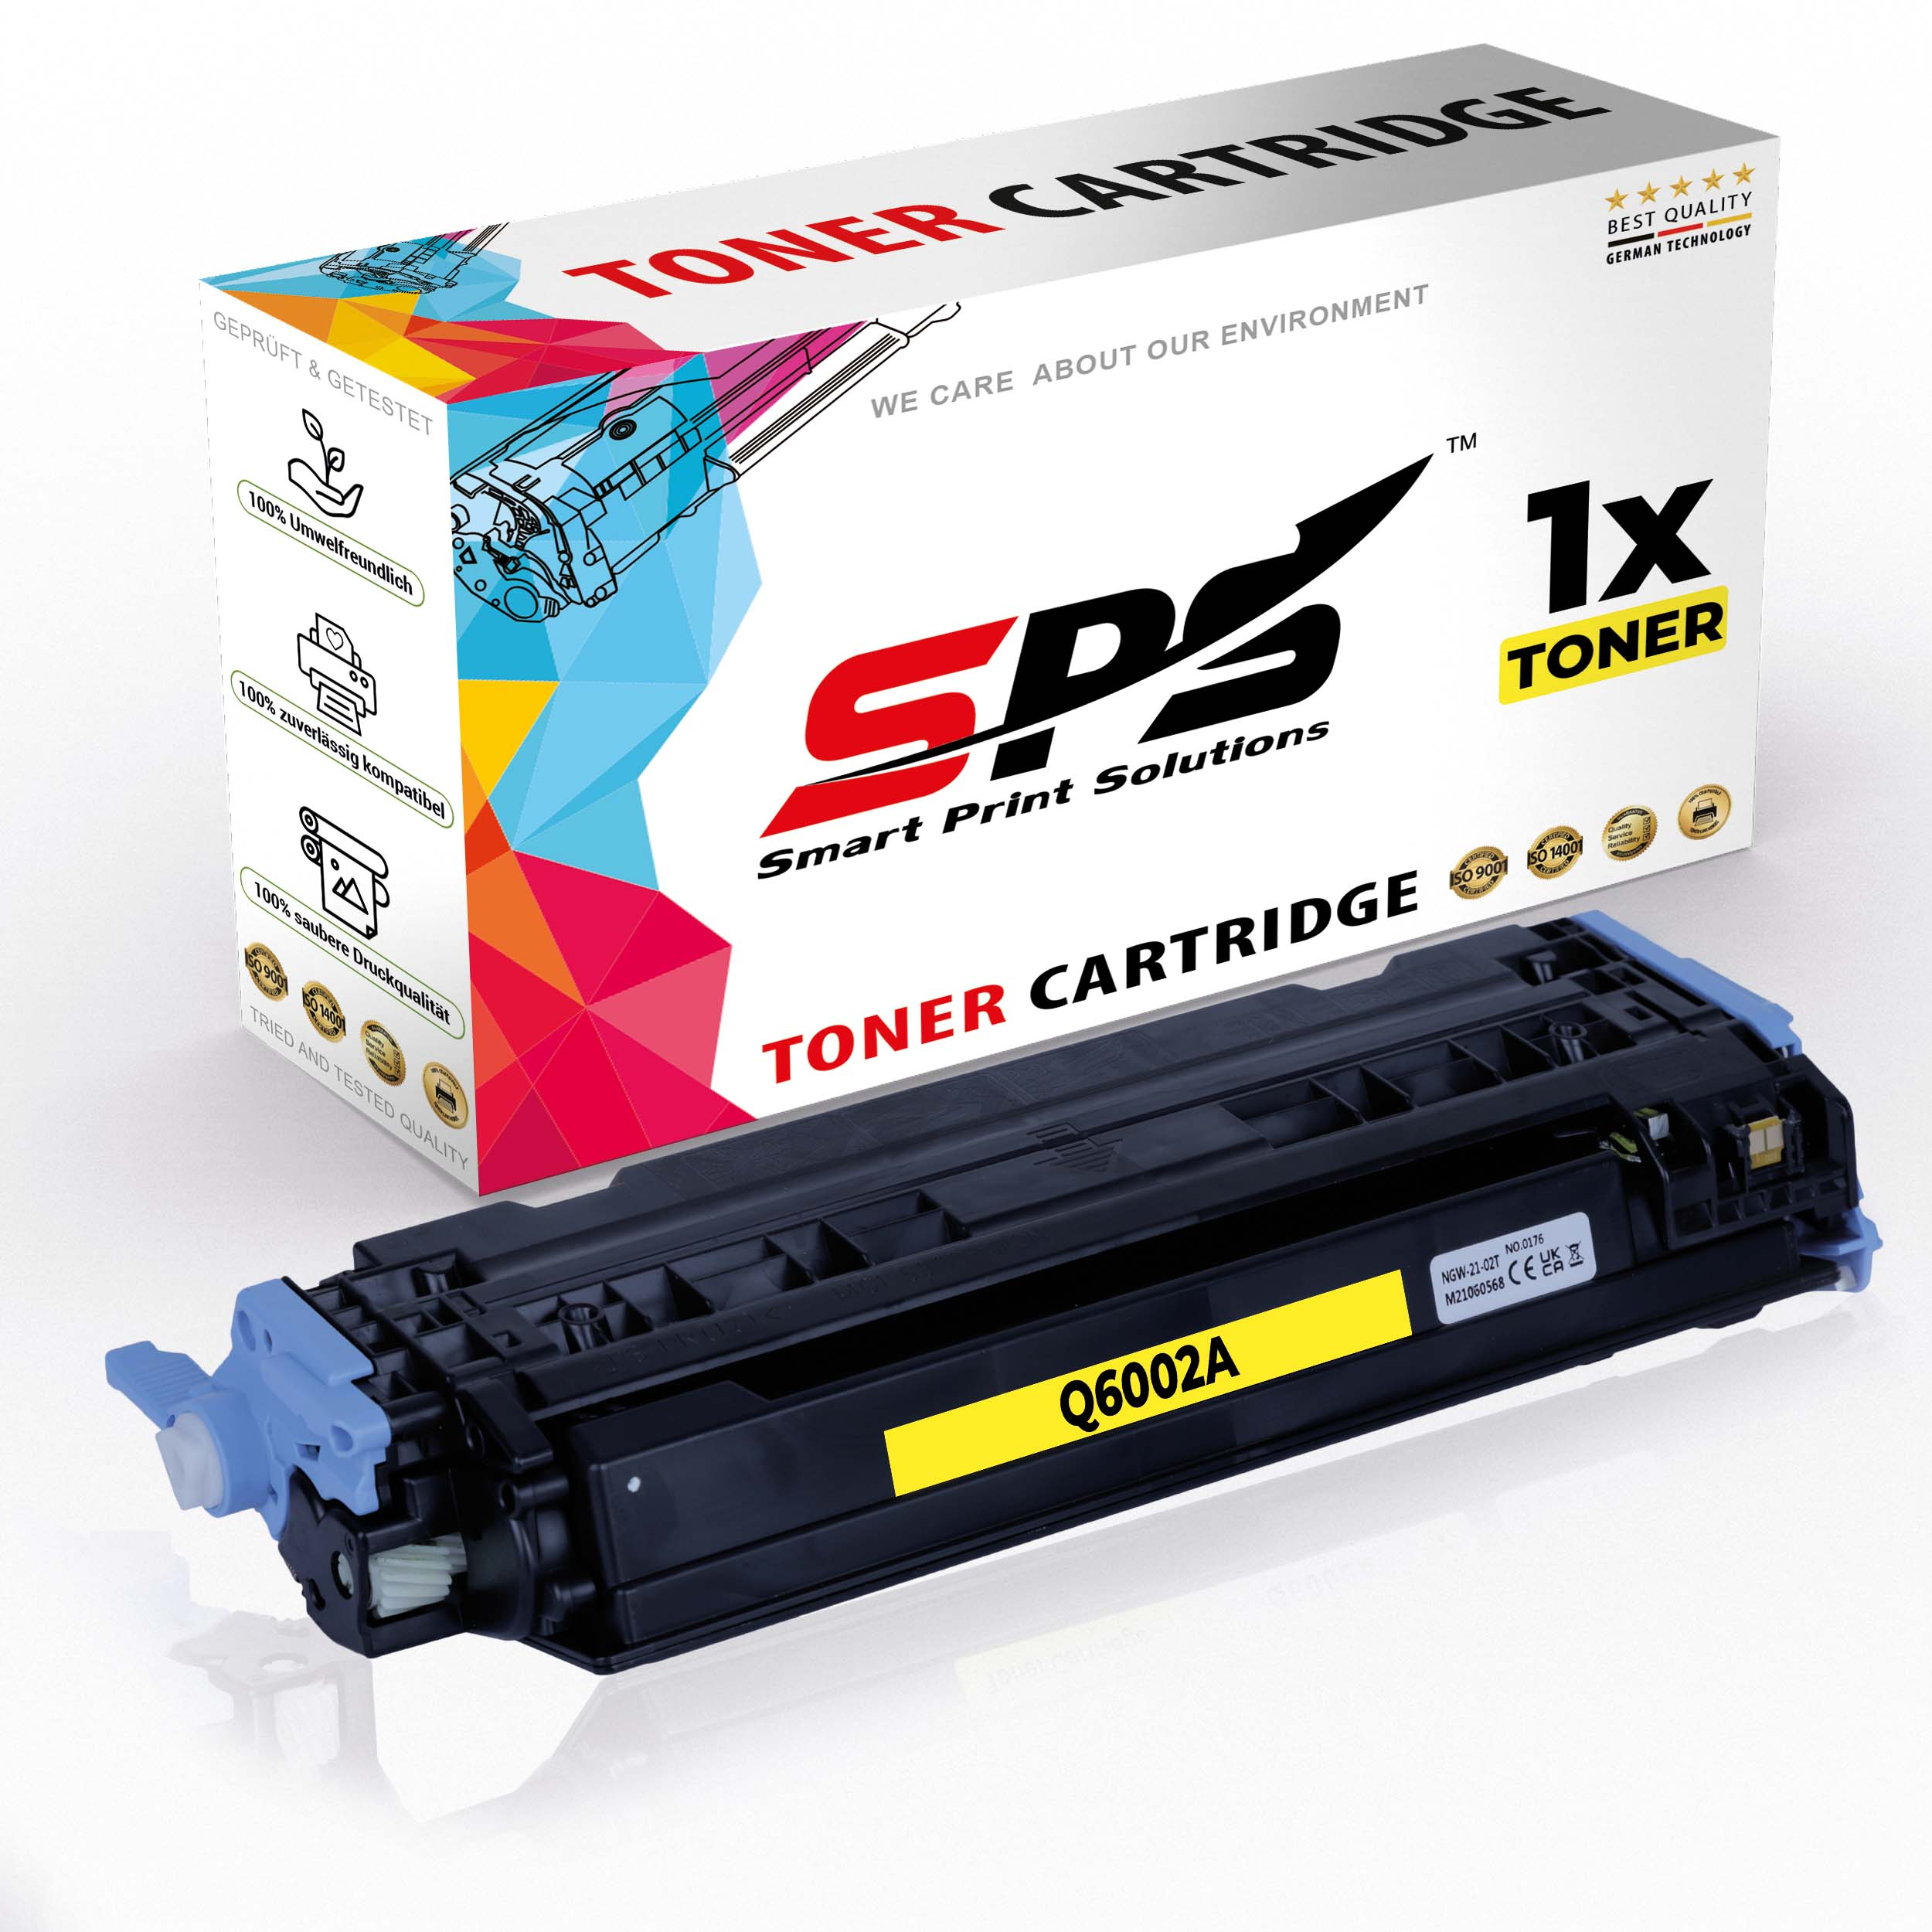 SPS S-8262 Color / Gelb 124A CM1015) (Q6002A Laserjet Toner